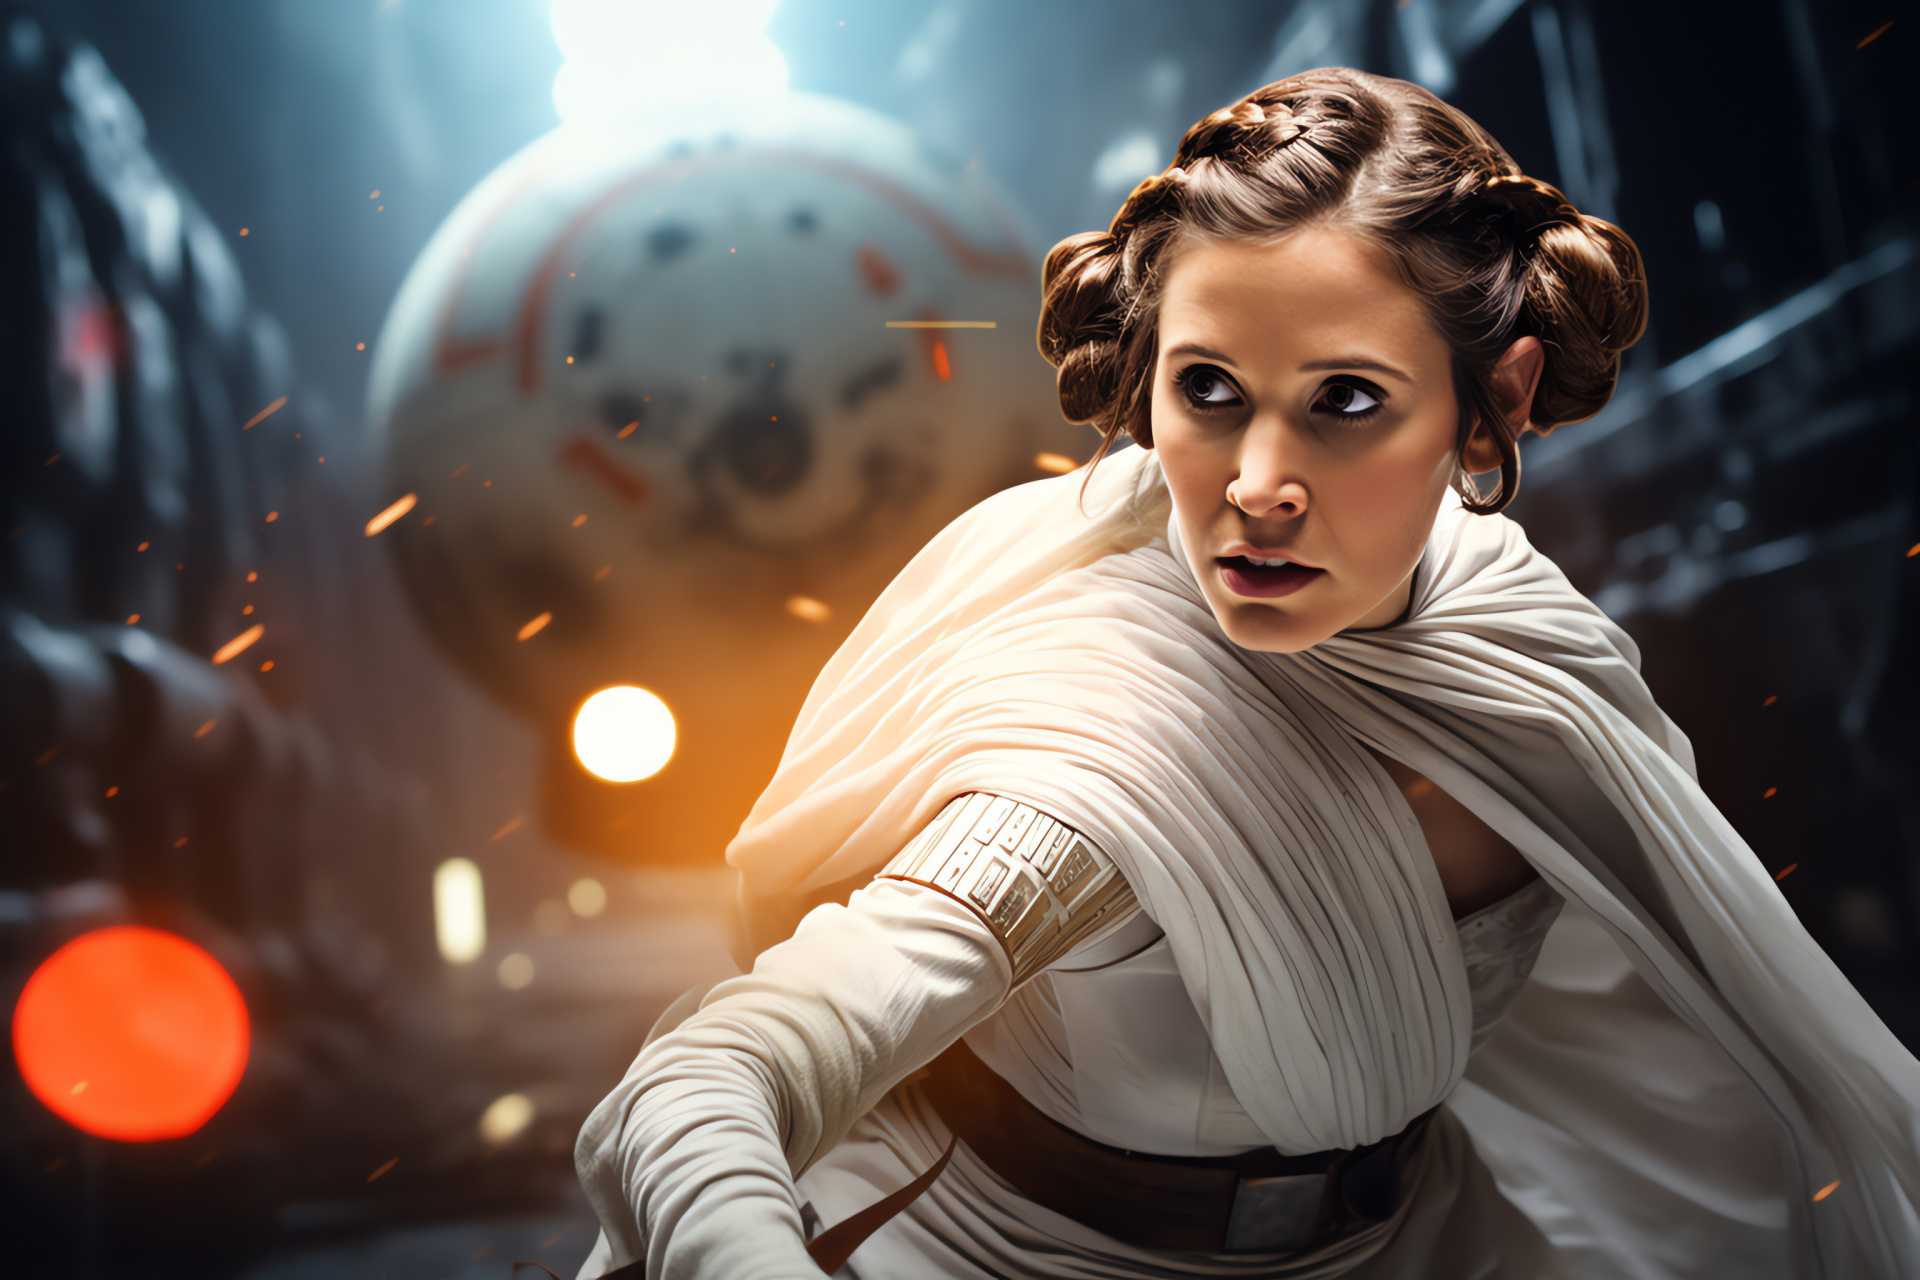 Princess Leia, White fashion, Iconic spaceship Millennium Falcon, Rebel leader, Sci-fi heroine, HD Desktop Wallpaper